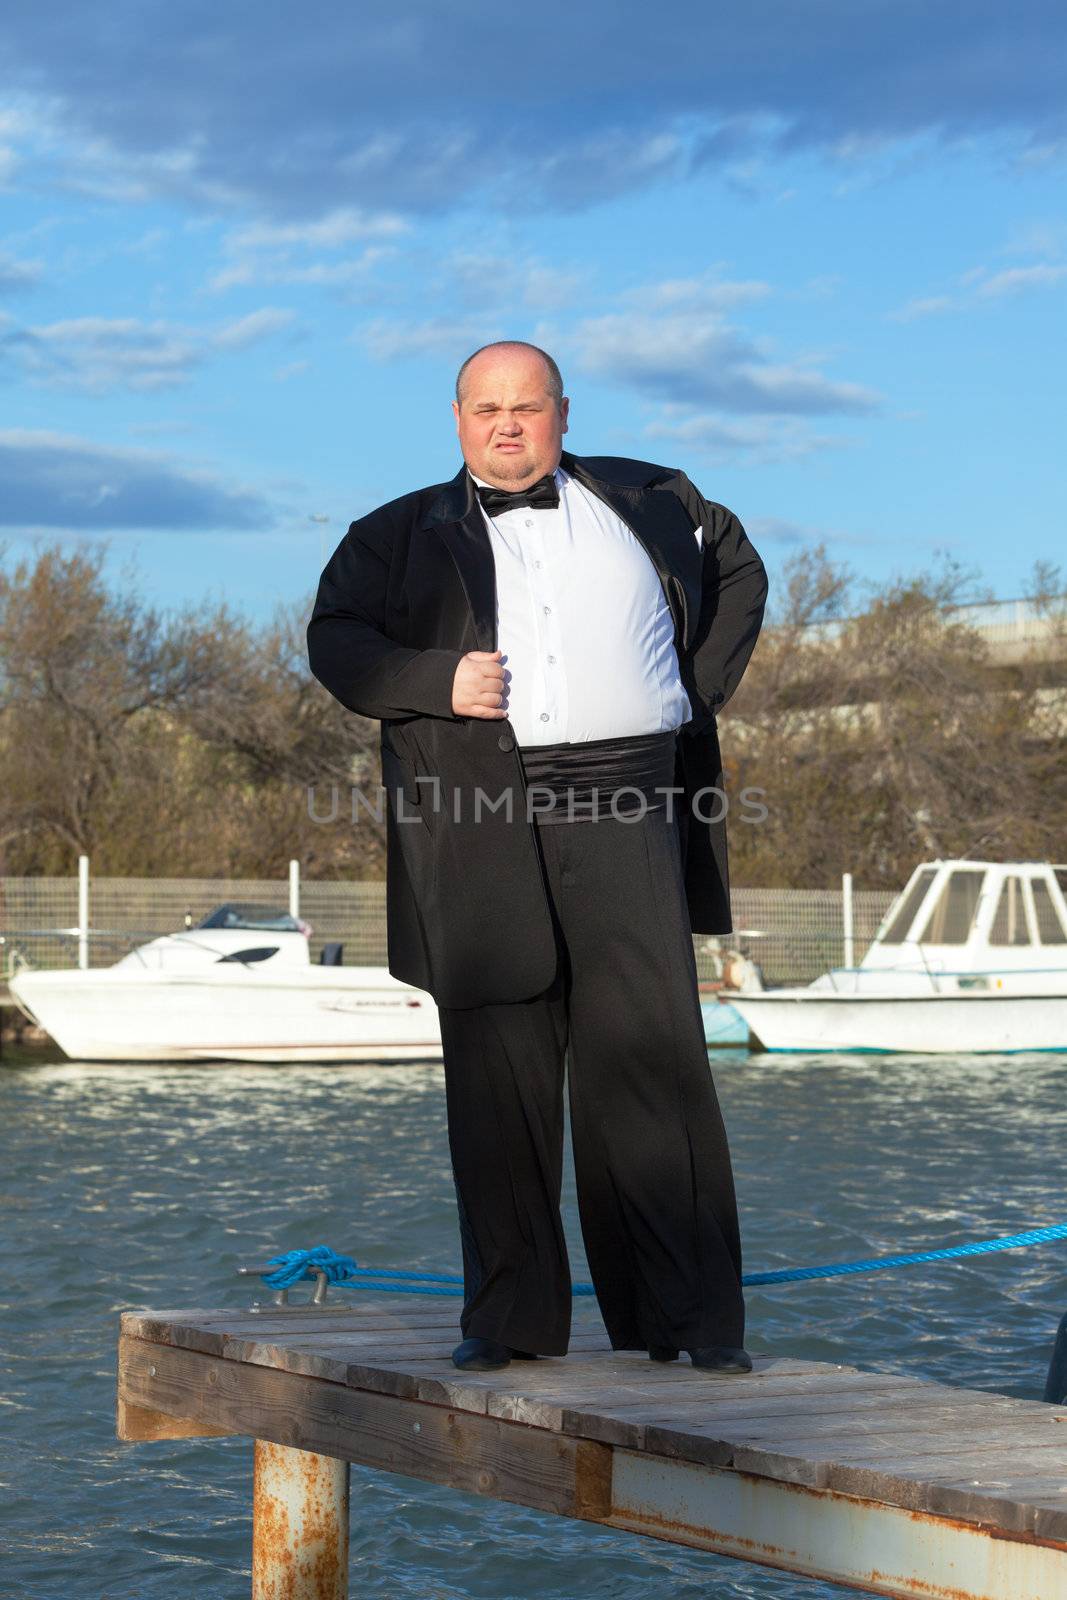 Fat man in tuxedo on pier by Discovod